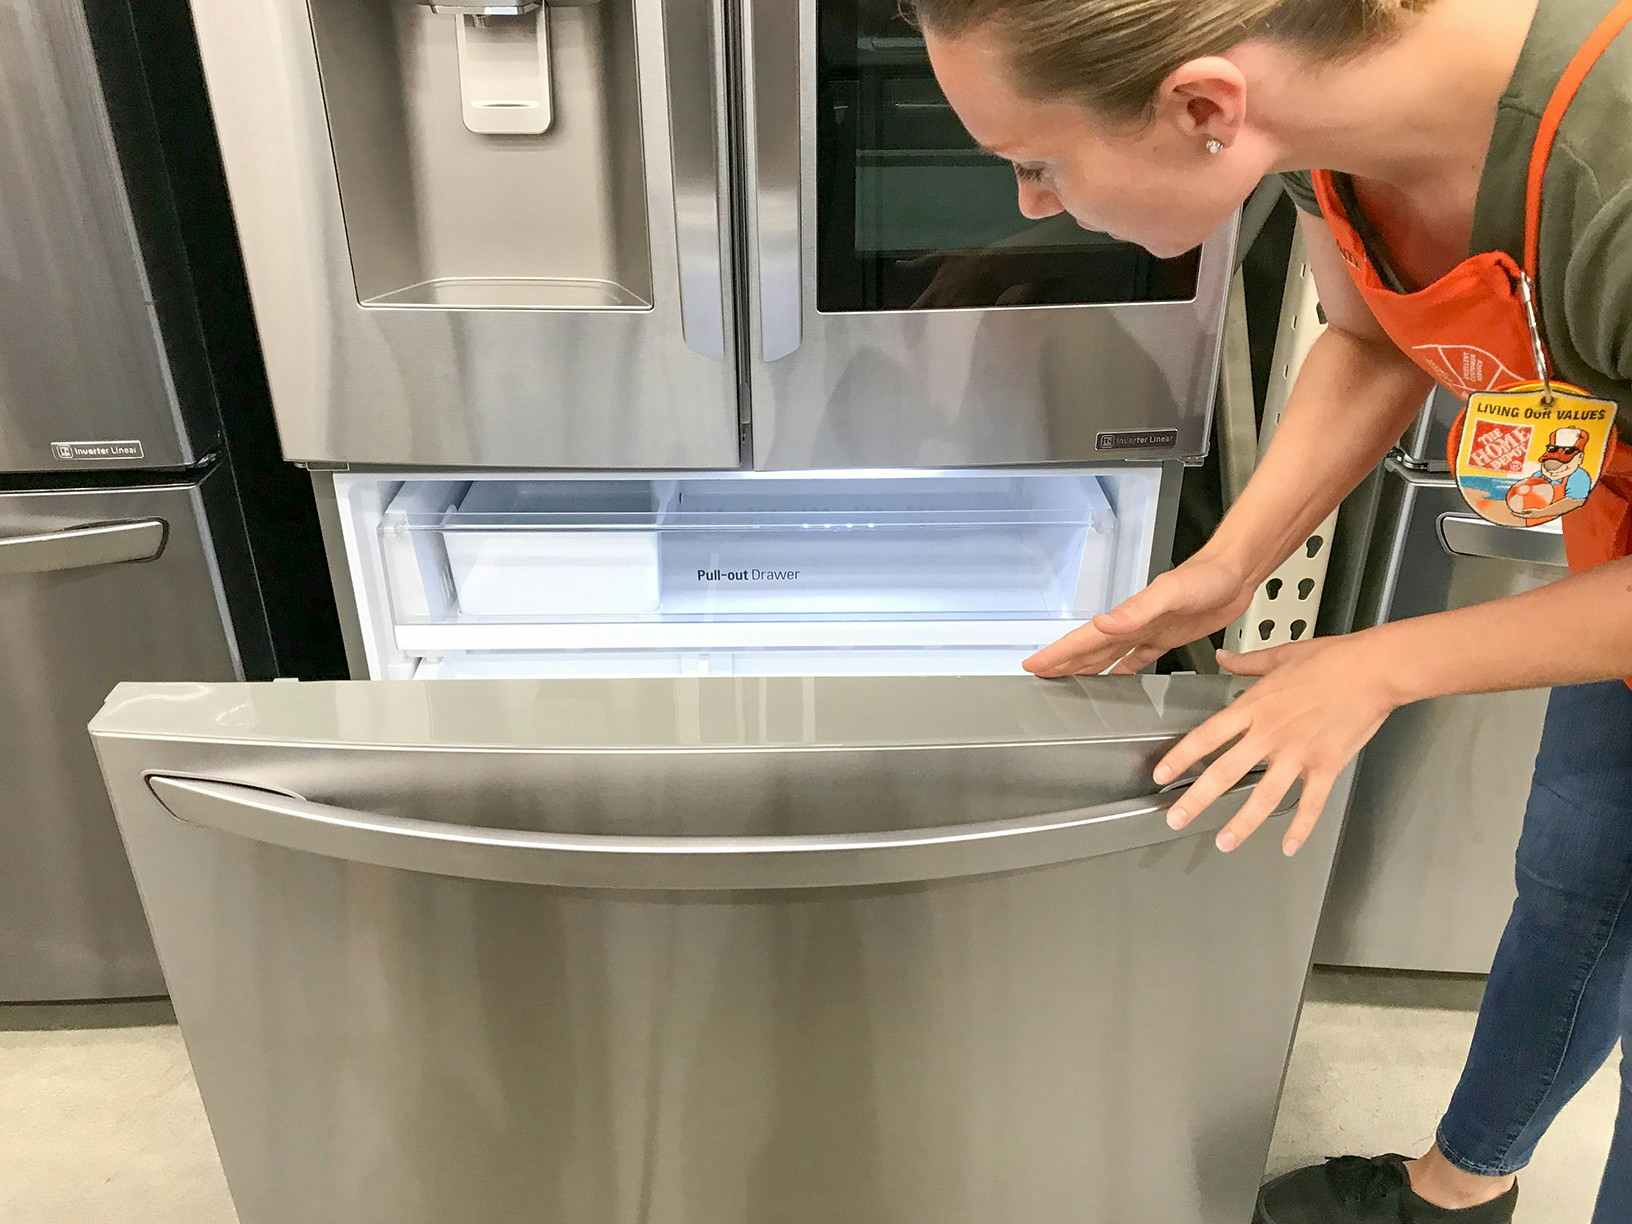 Home Depot worker opening freezer